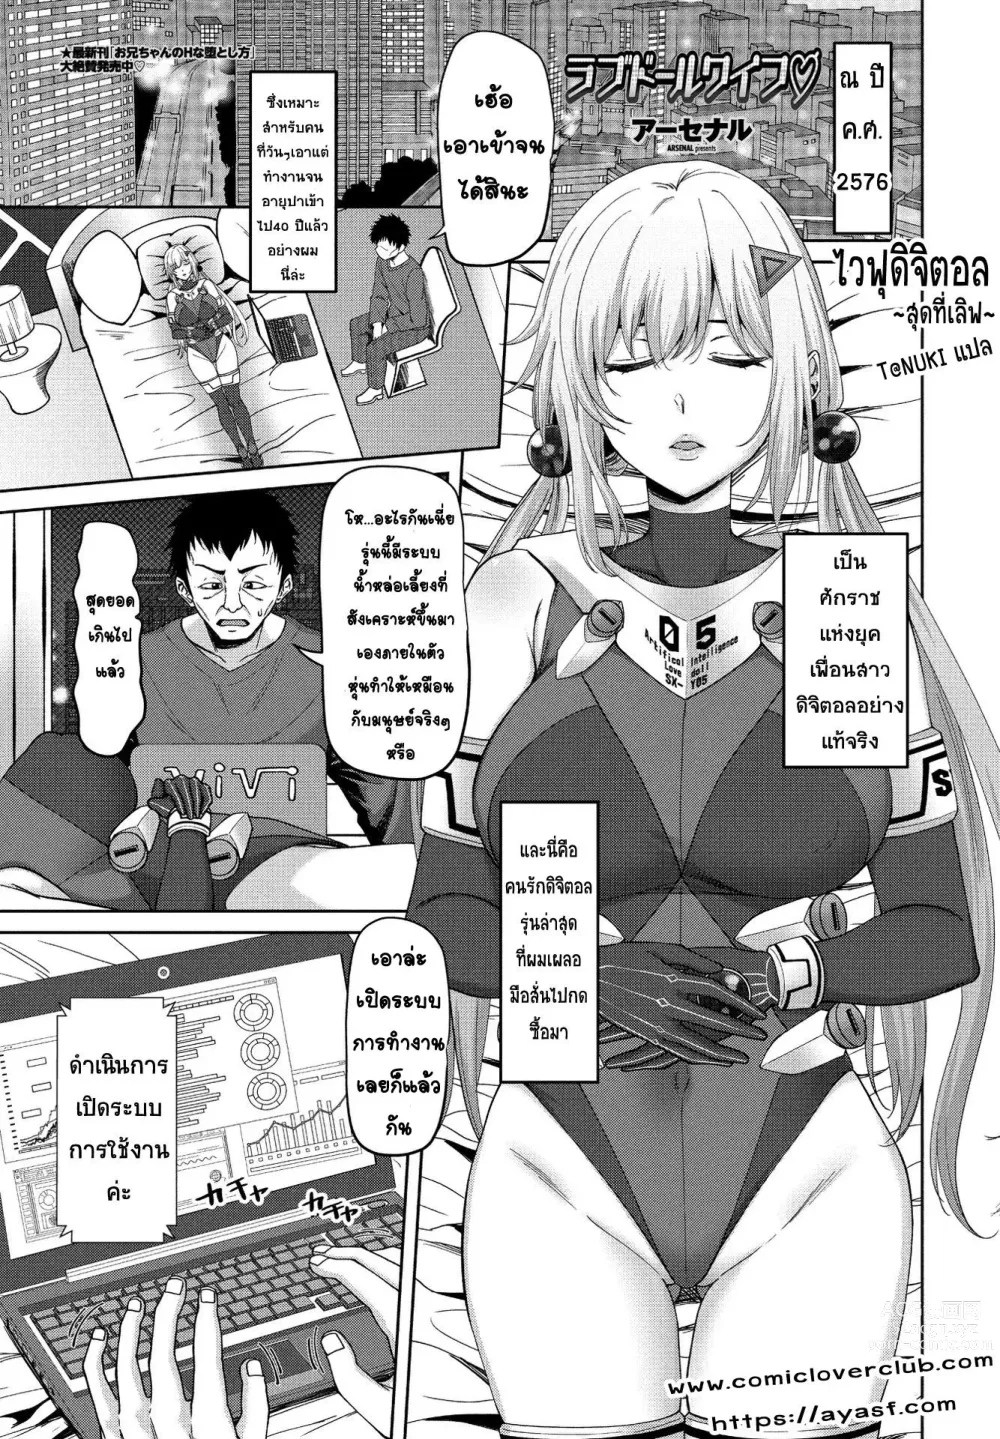 Page 1 of manga ไวฟุดิจิตอล ~สุดที่เลิฟ~